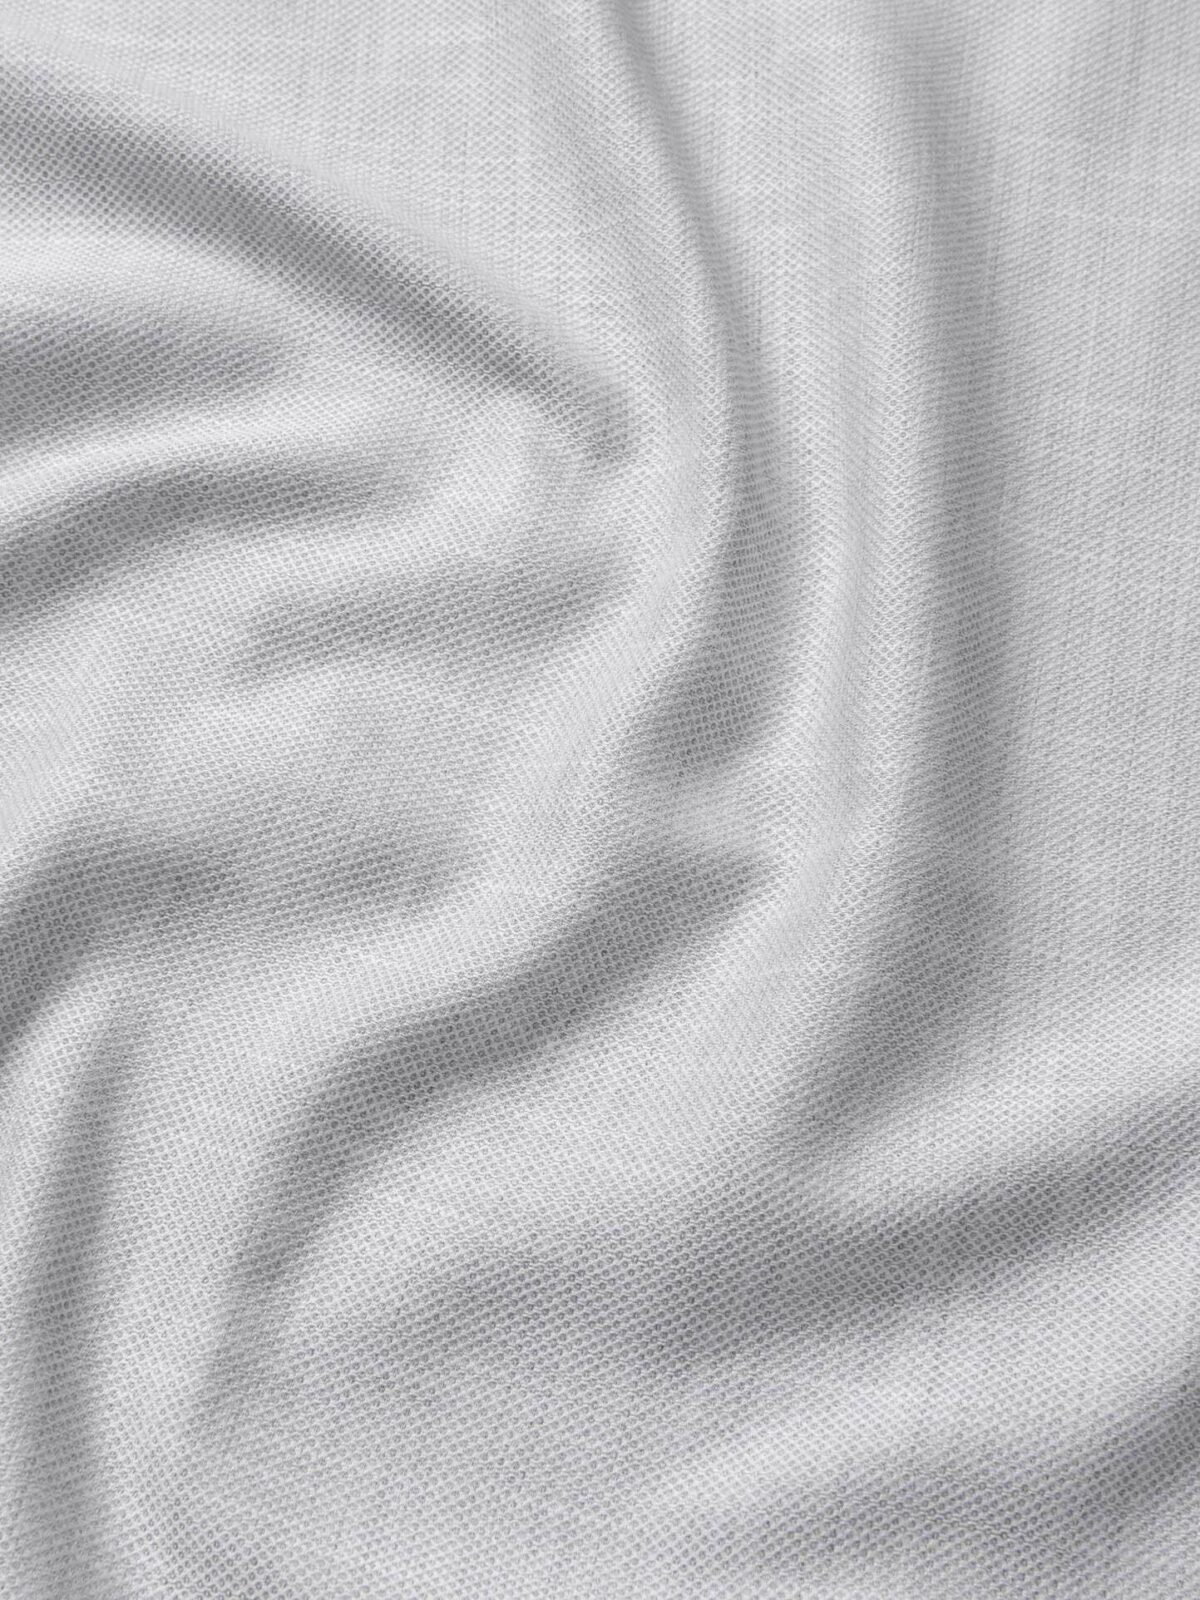 Amalfi Pale Sage Melange Pique Shirts by Proper Cloth